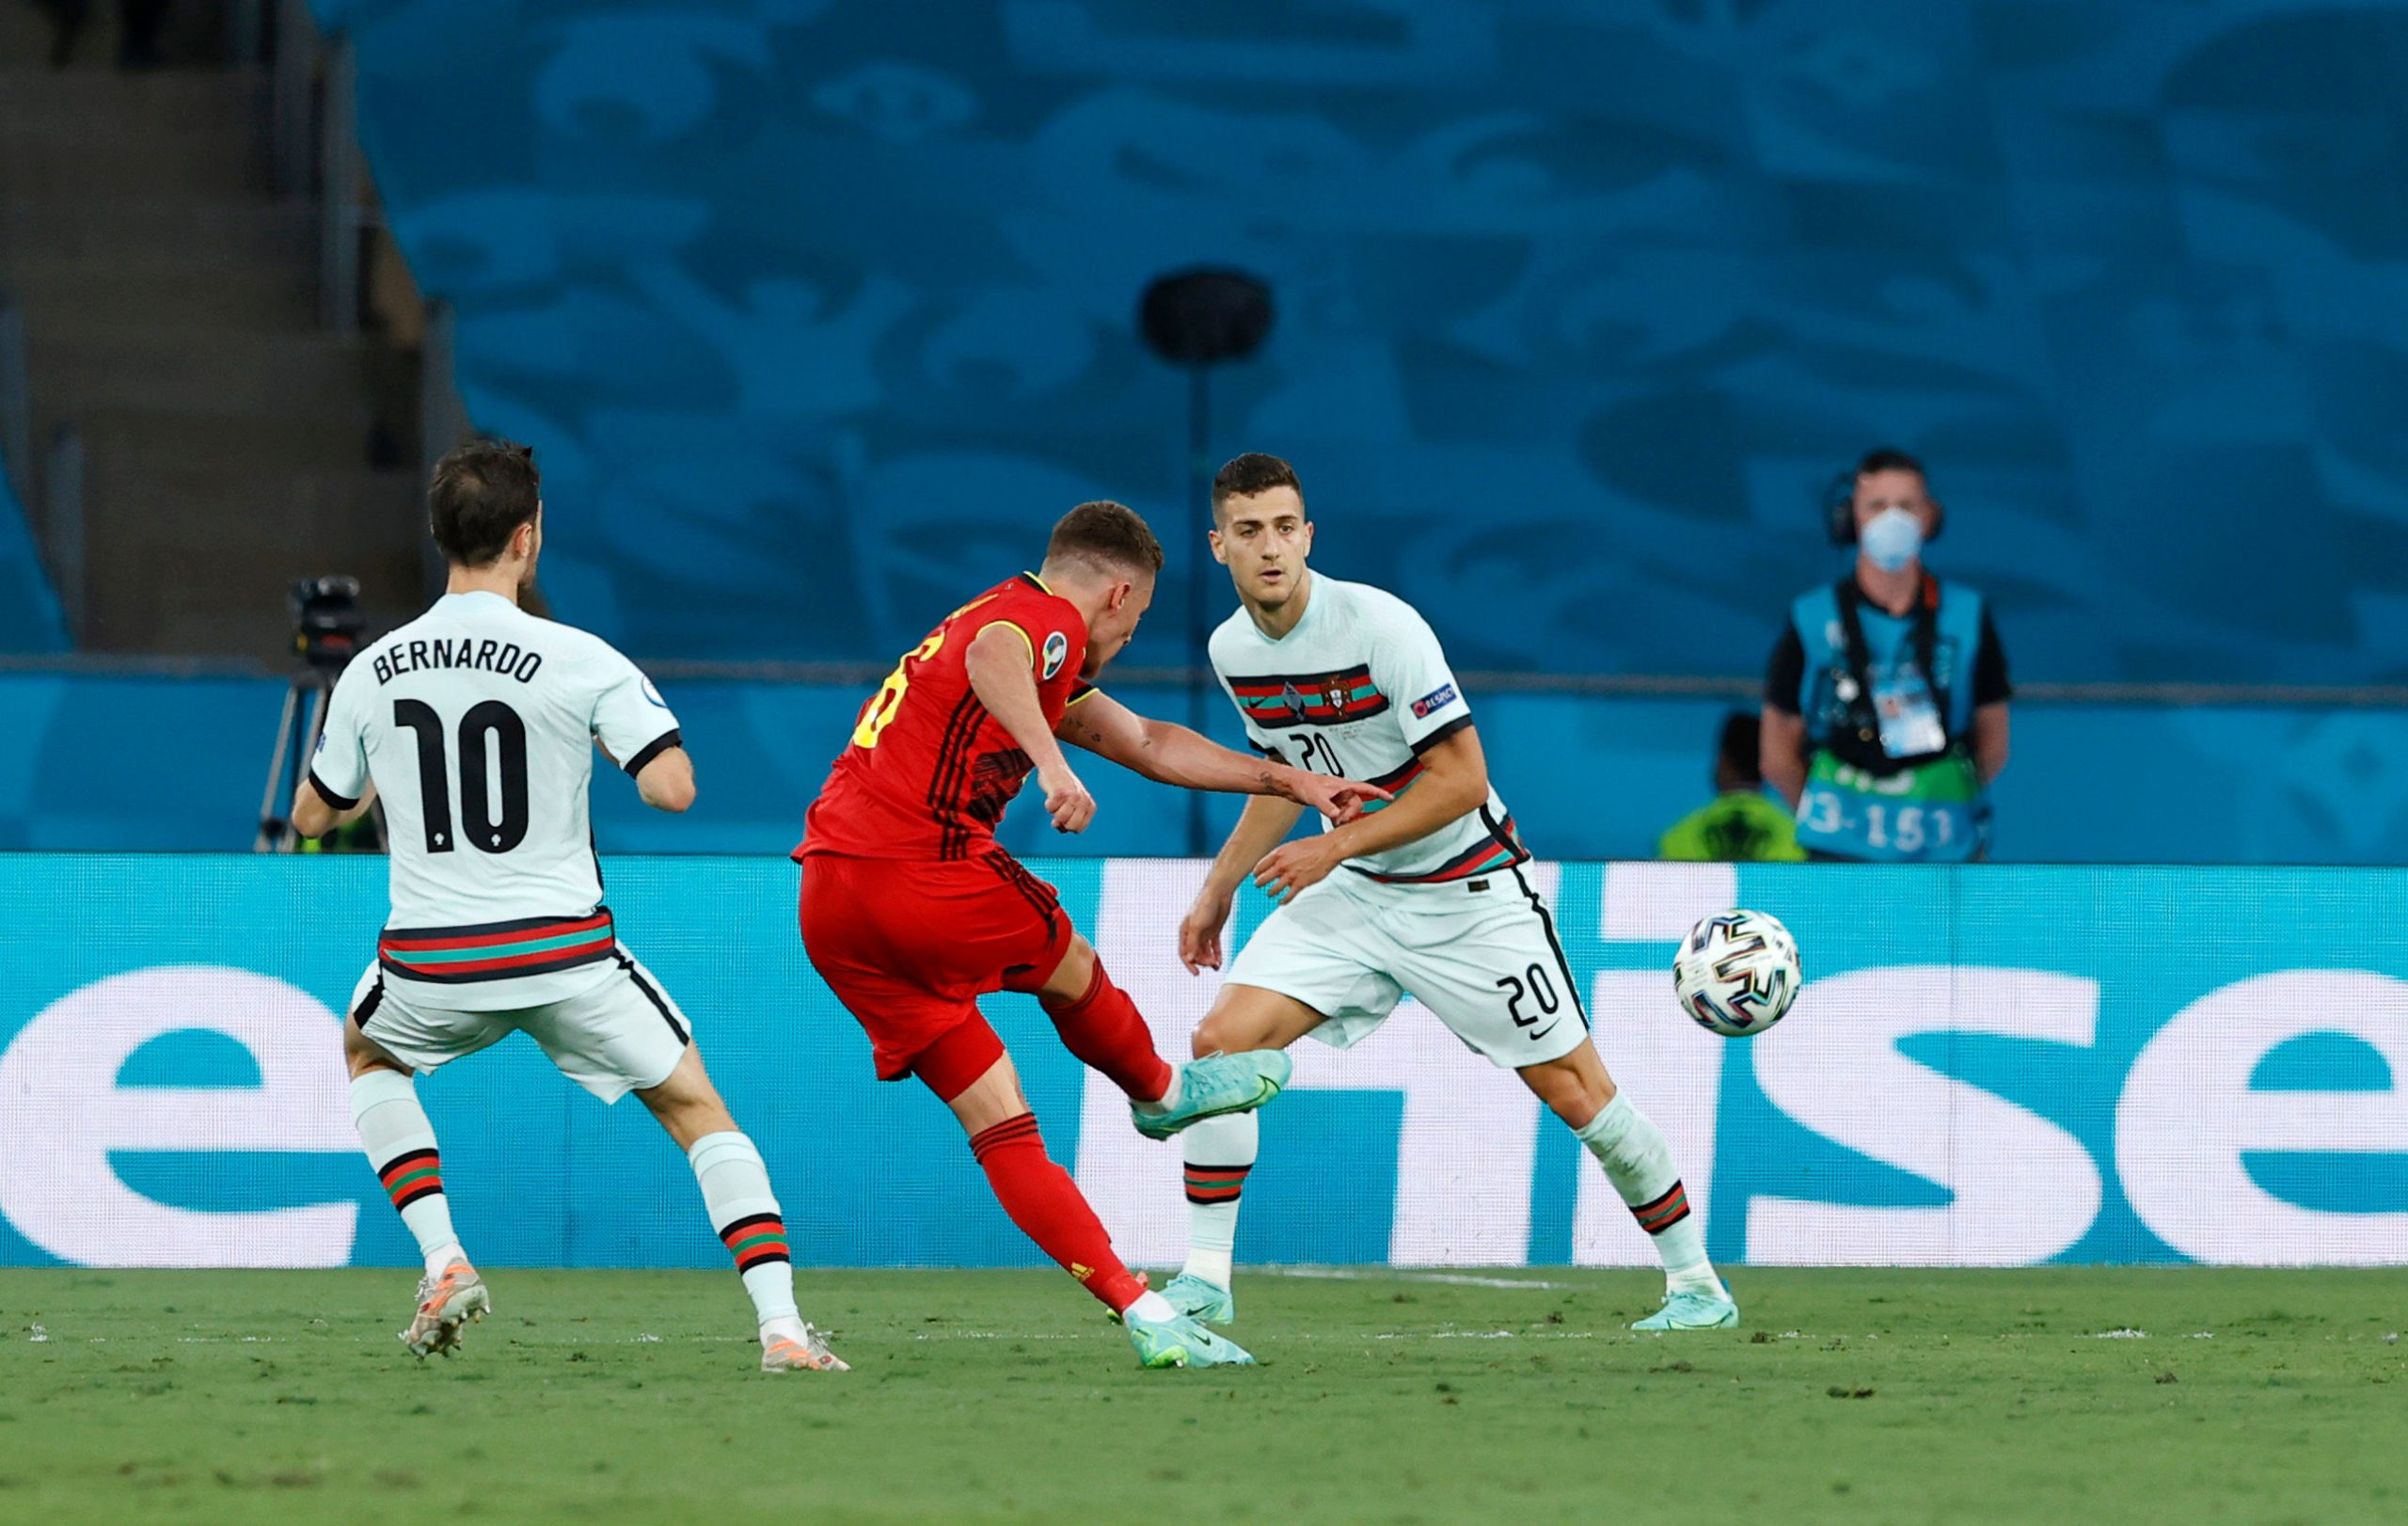 EURO 2020: Thorgan Hazard’s screamer puts Belgium ahead vs Portugal